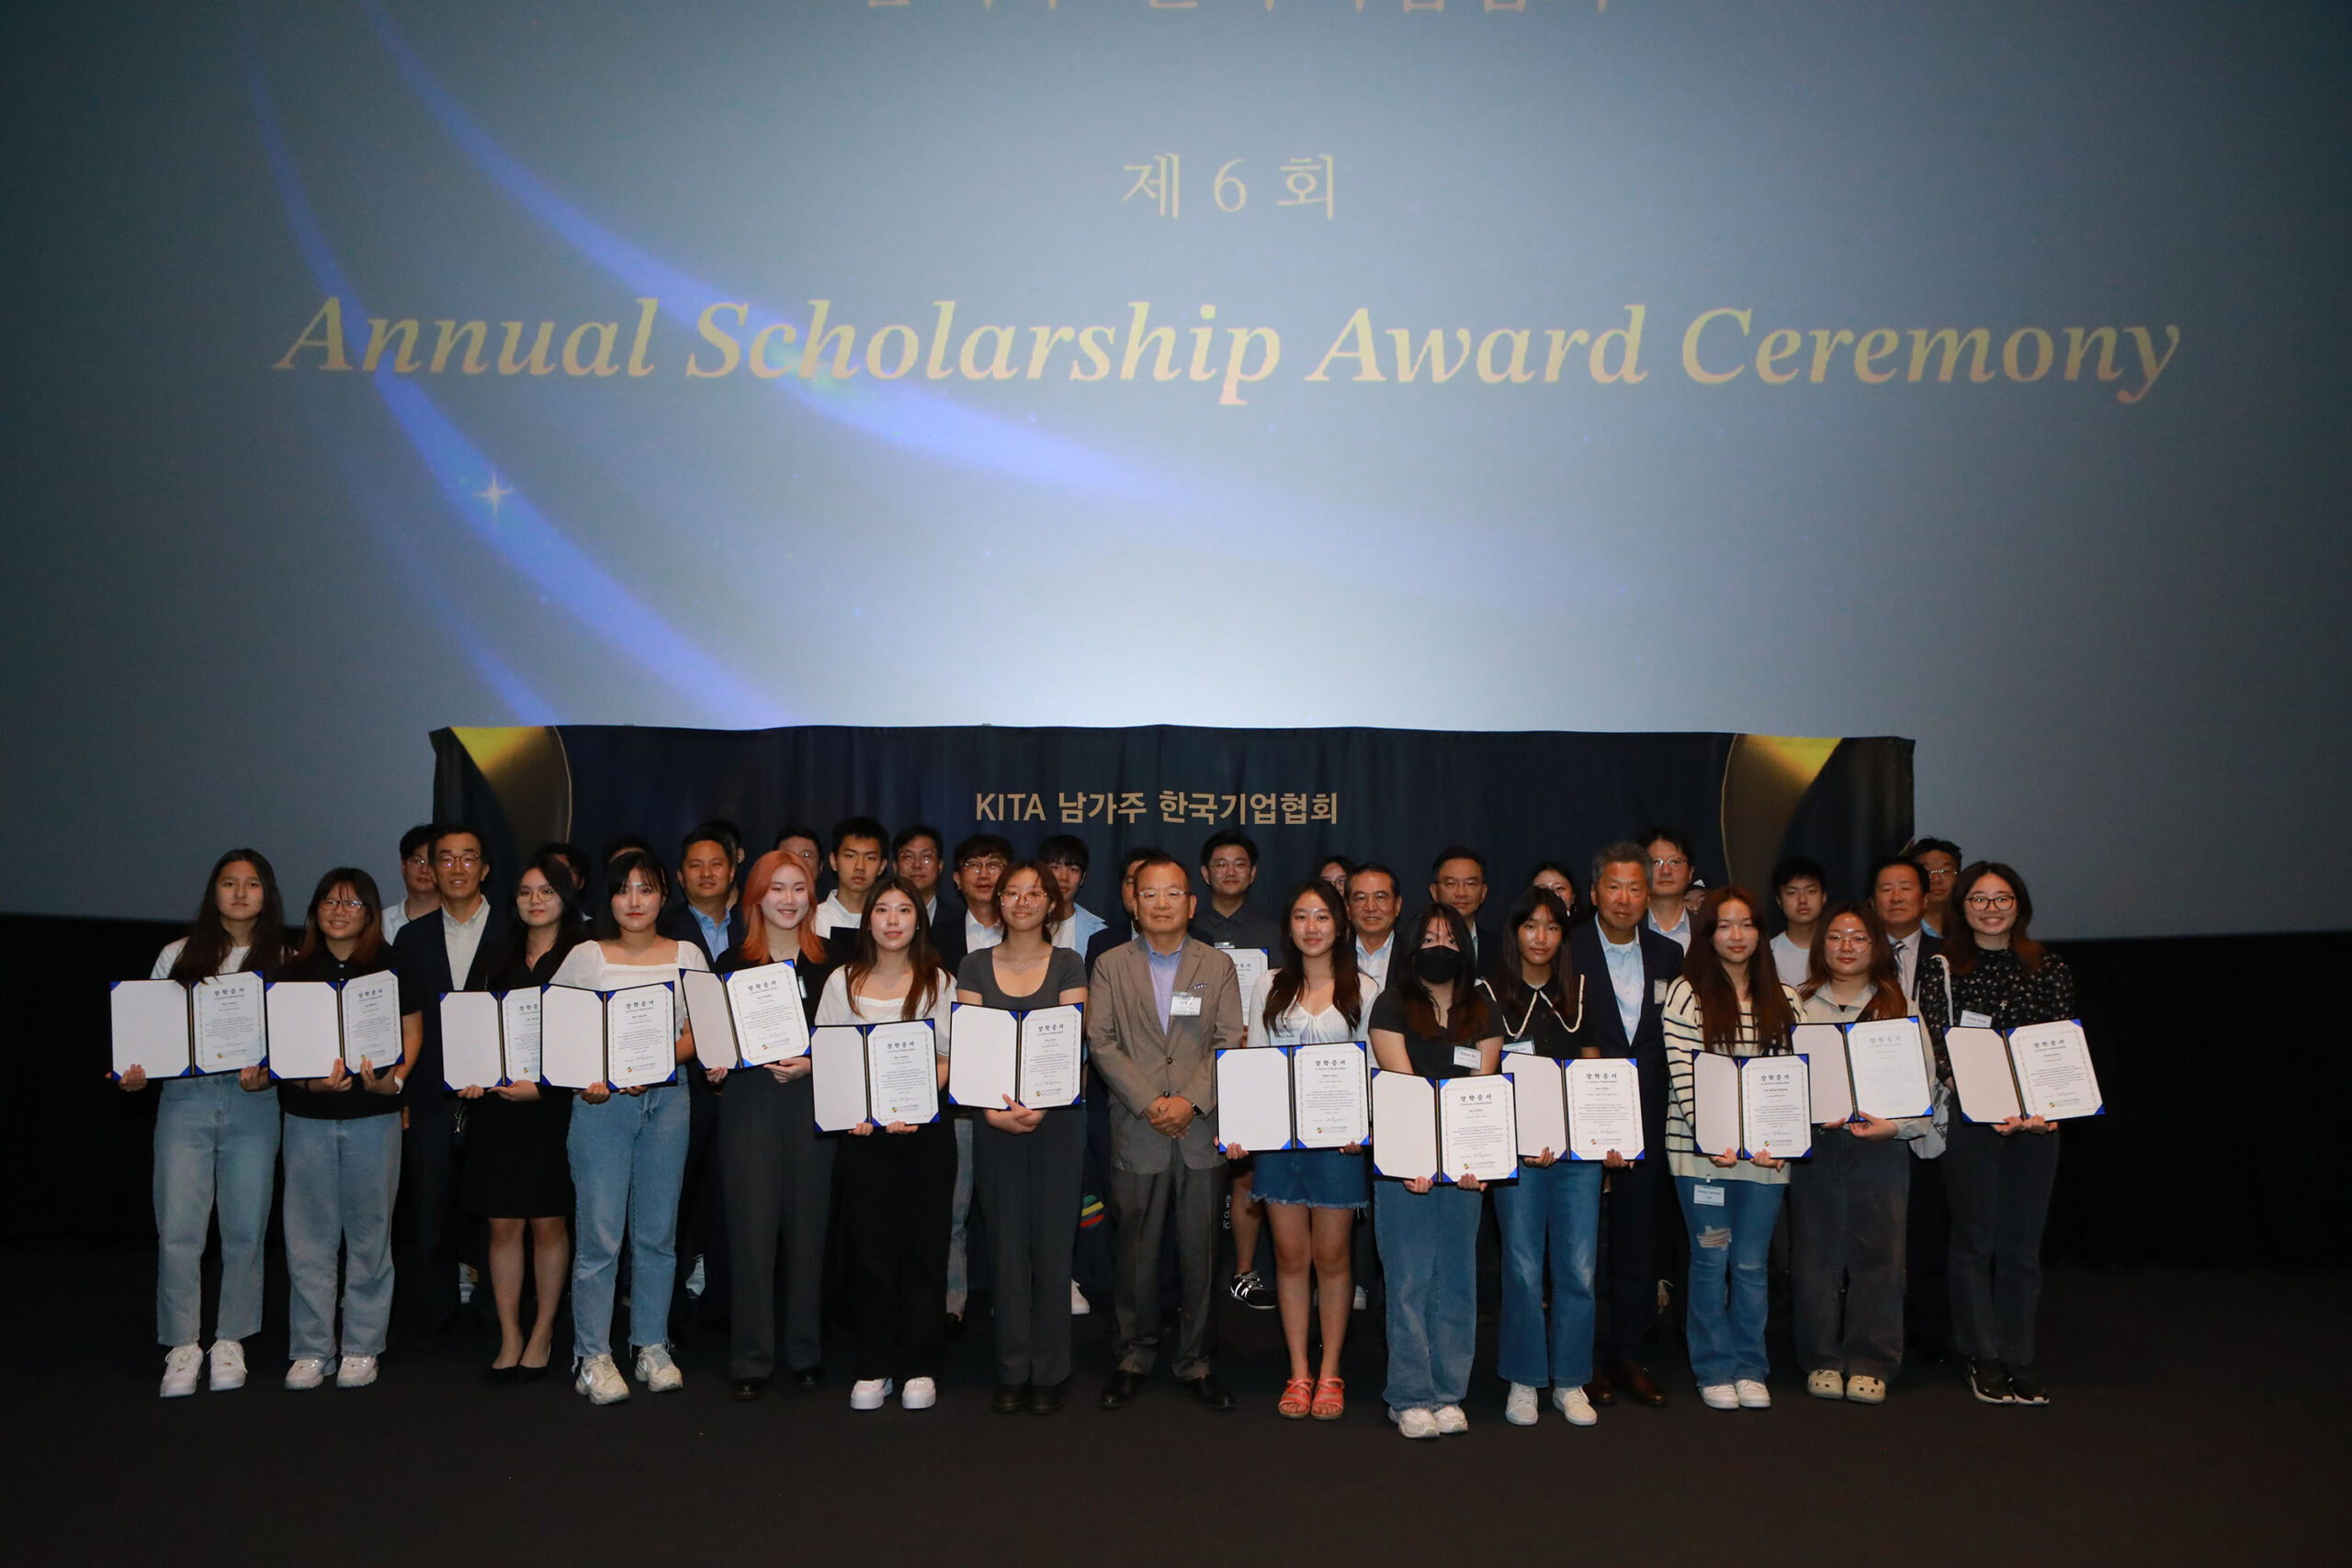 6th Annual Scholarship Award Ceremony